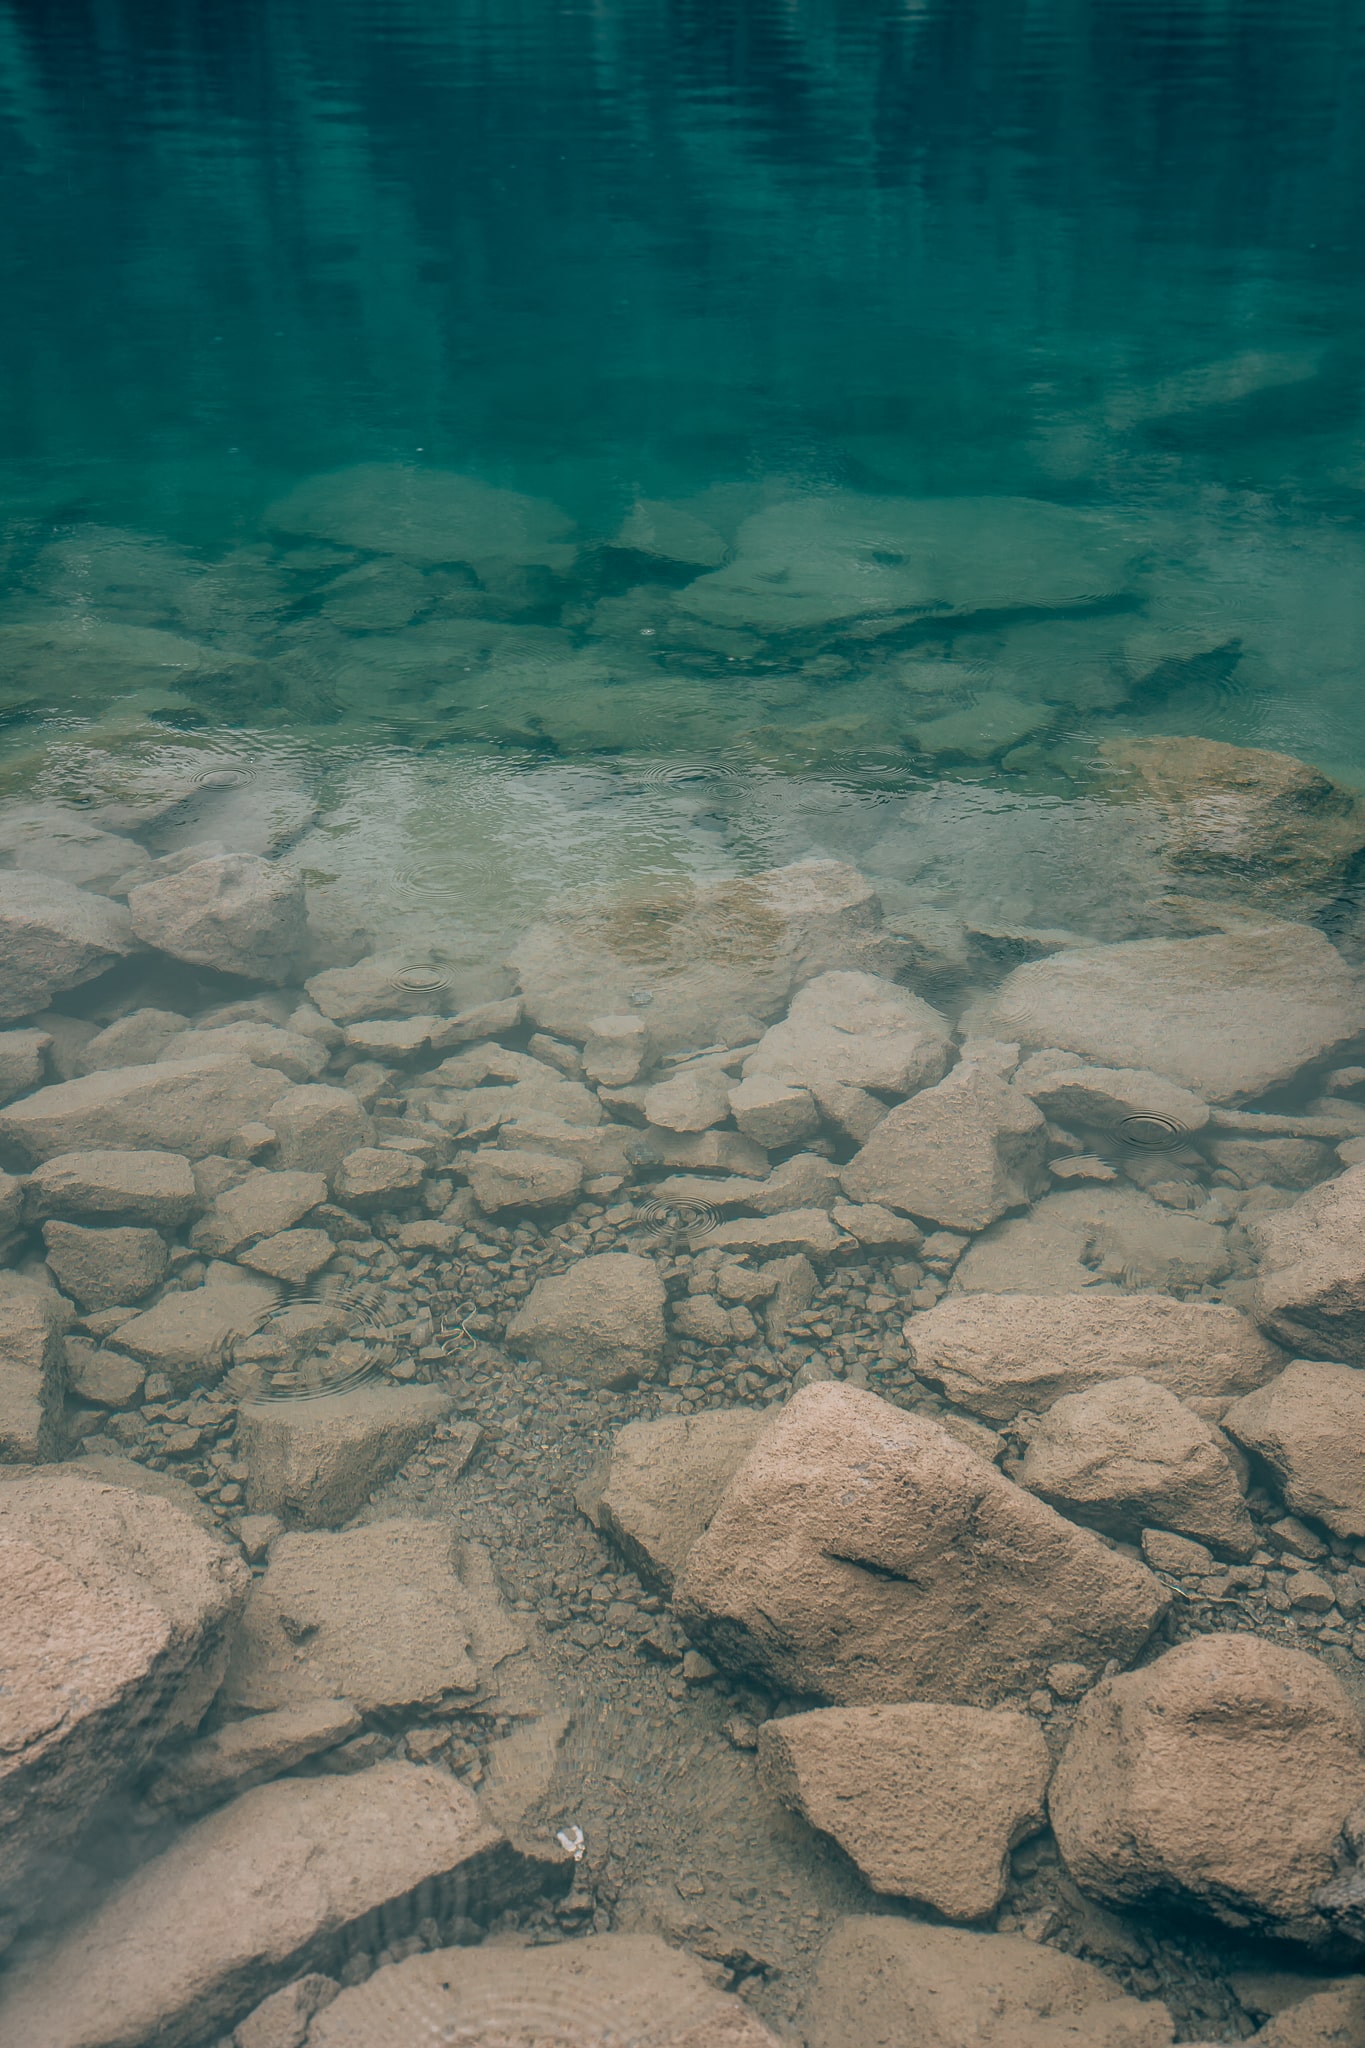 Up close shot of the super clear and super blue water at Laguna 69 in Huascaran National Park in Peru